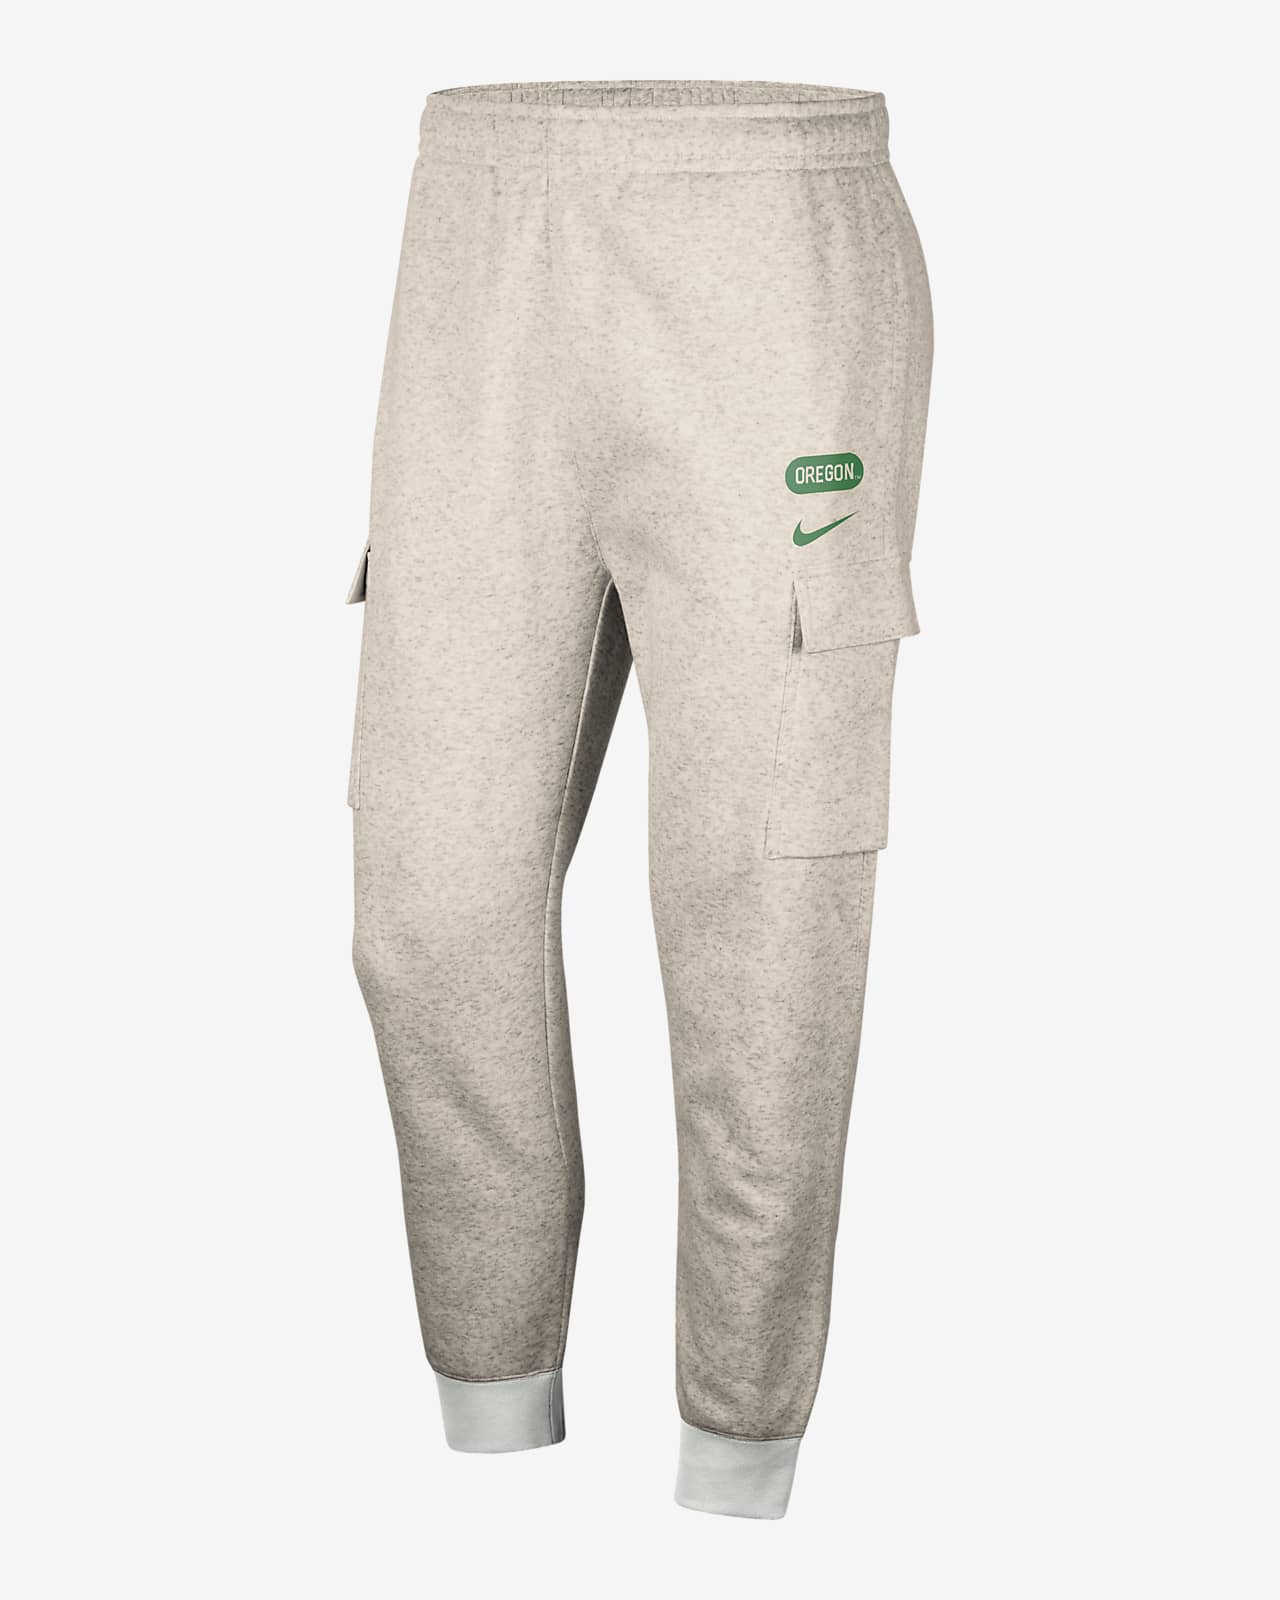 Oregon Club Men's Nike College Cargo Pants